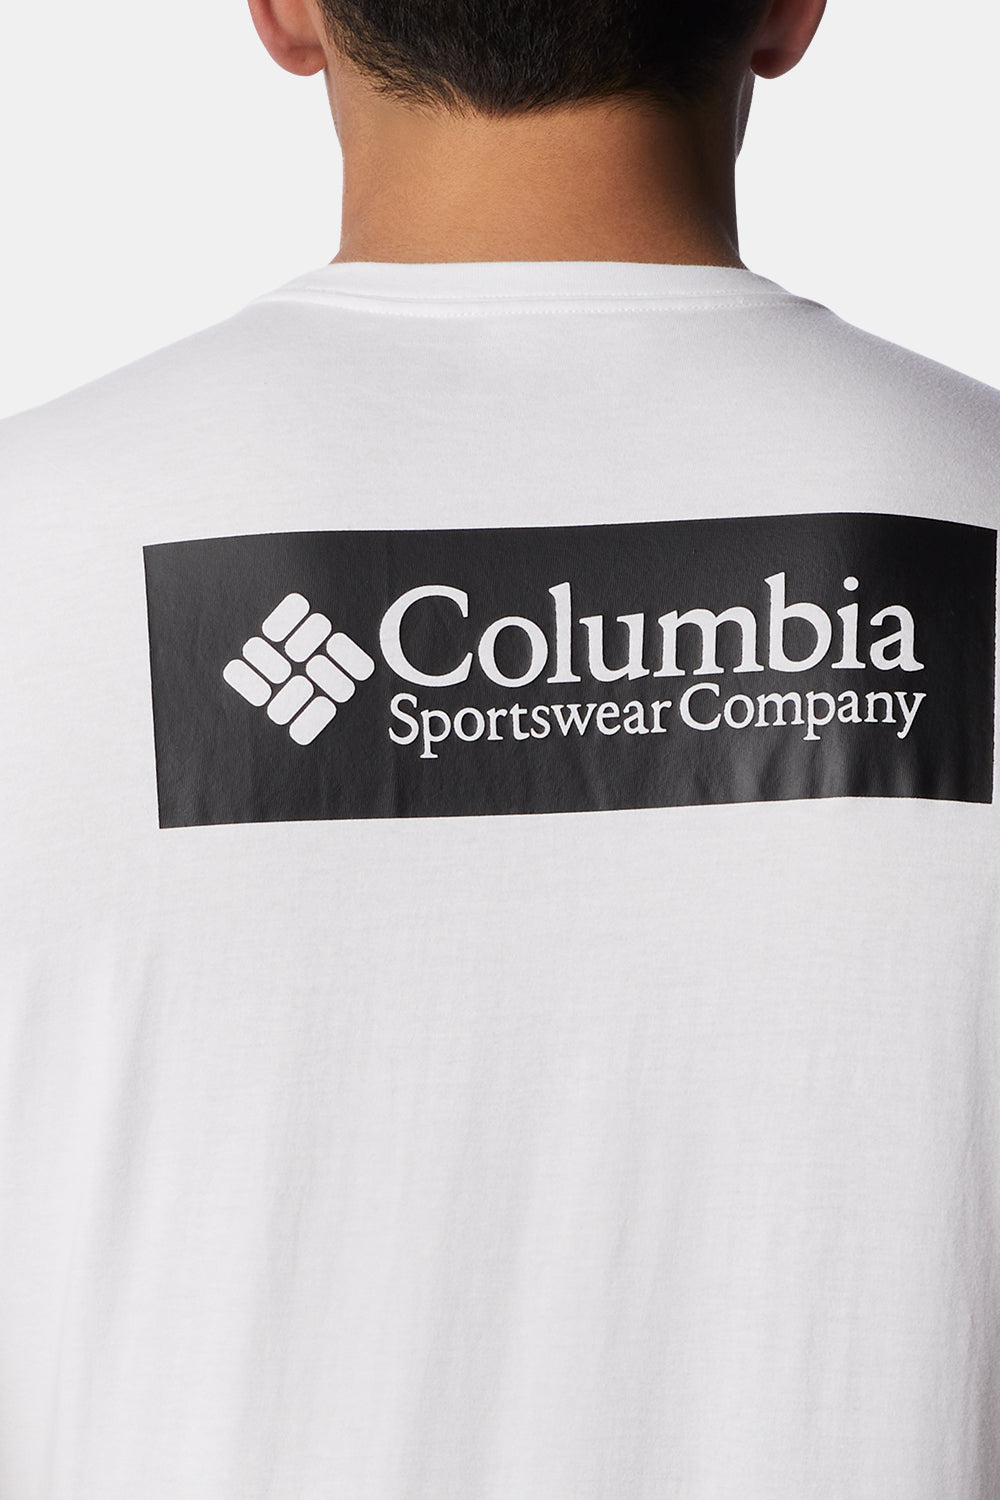 Columbia North Cascades Short Sleeve T-Shirt (White)
